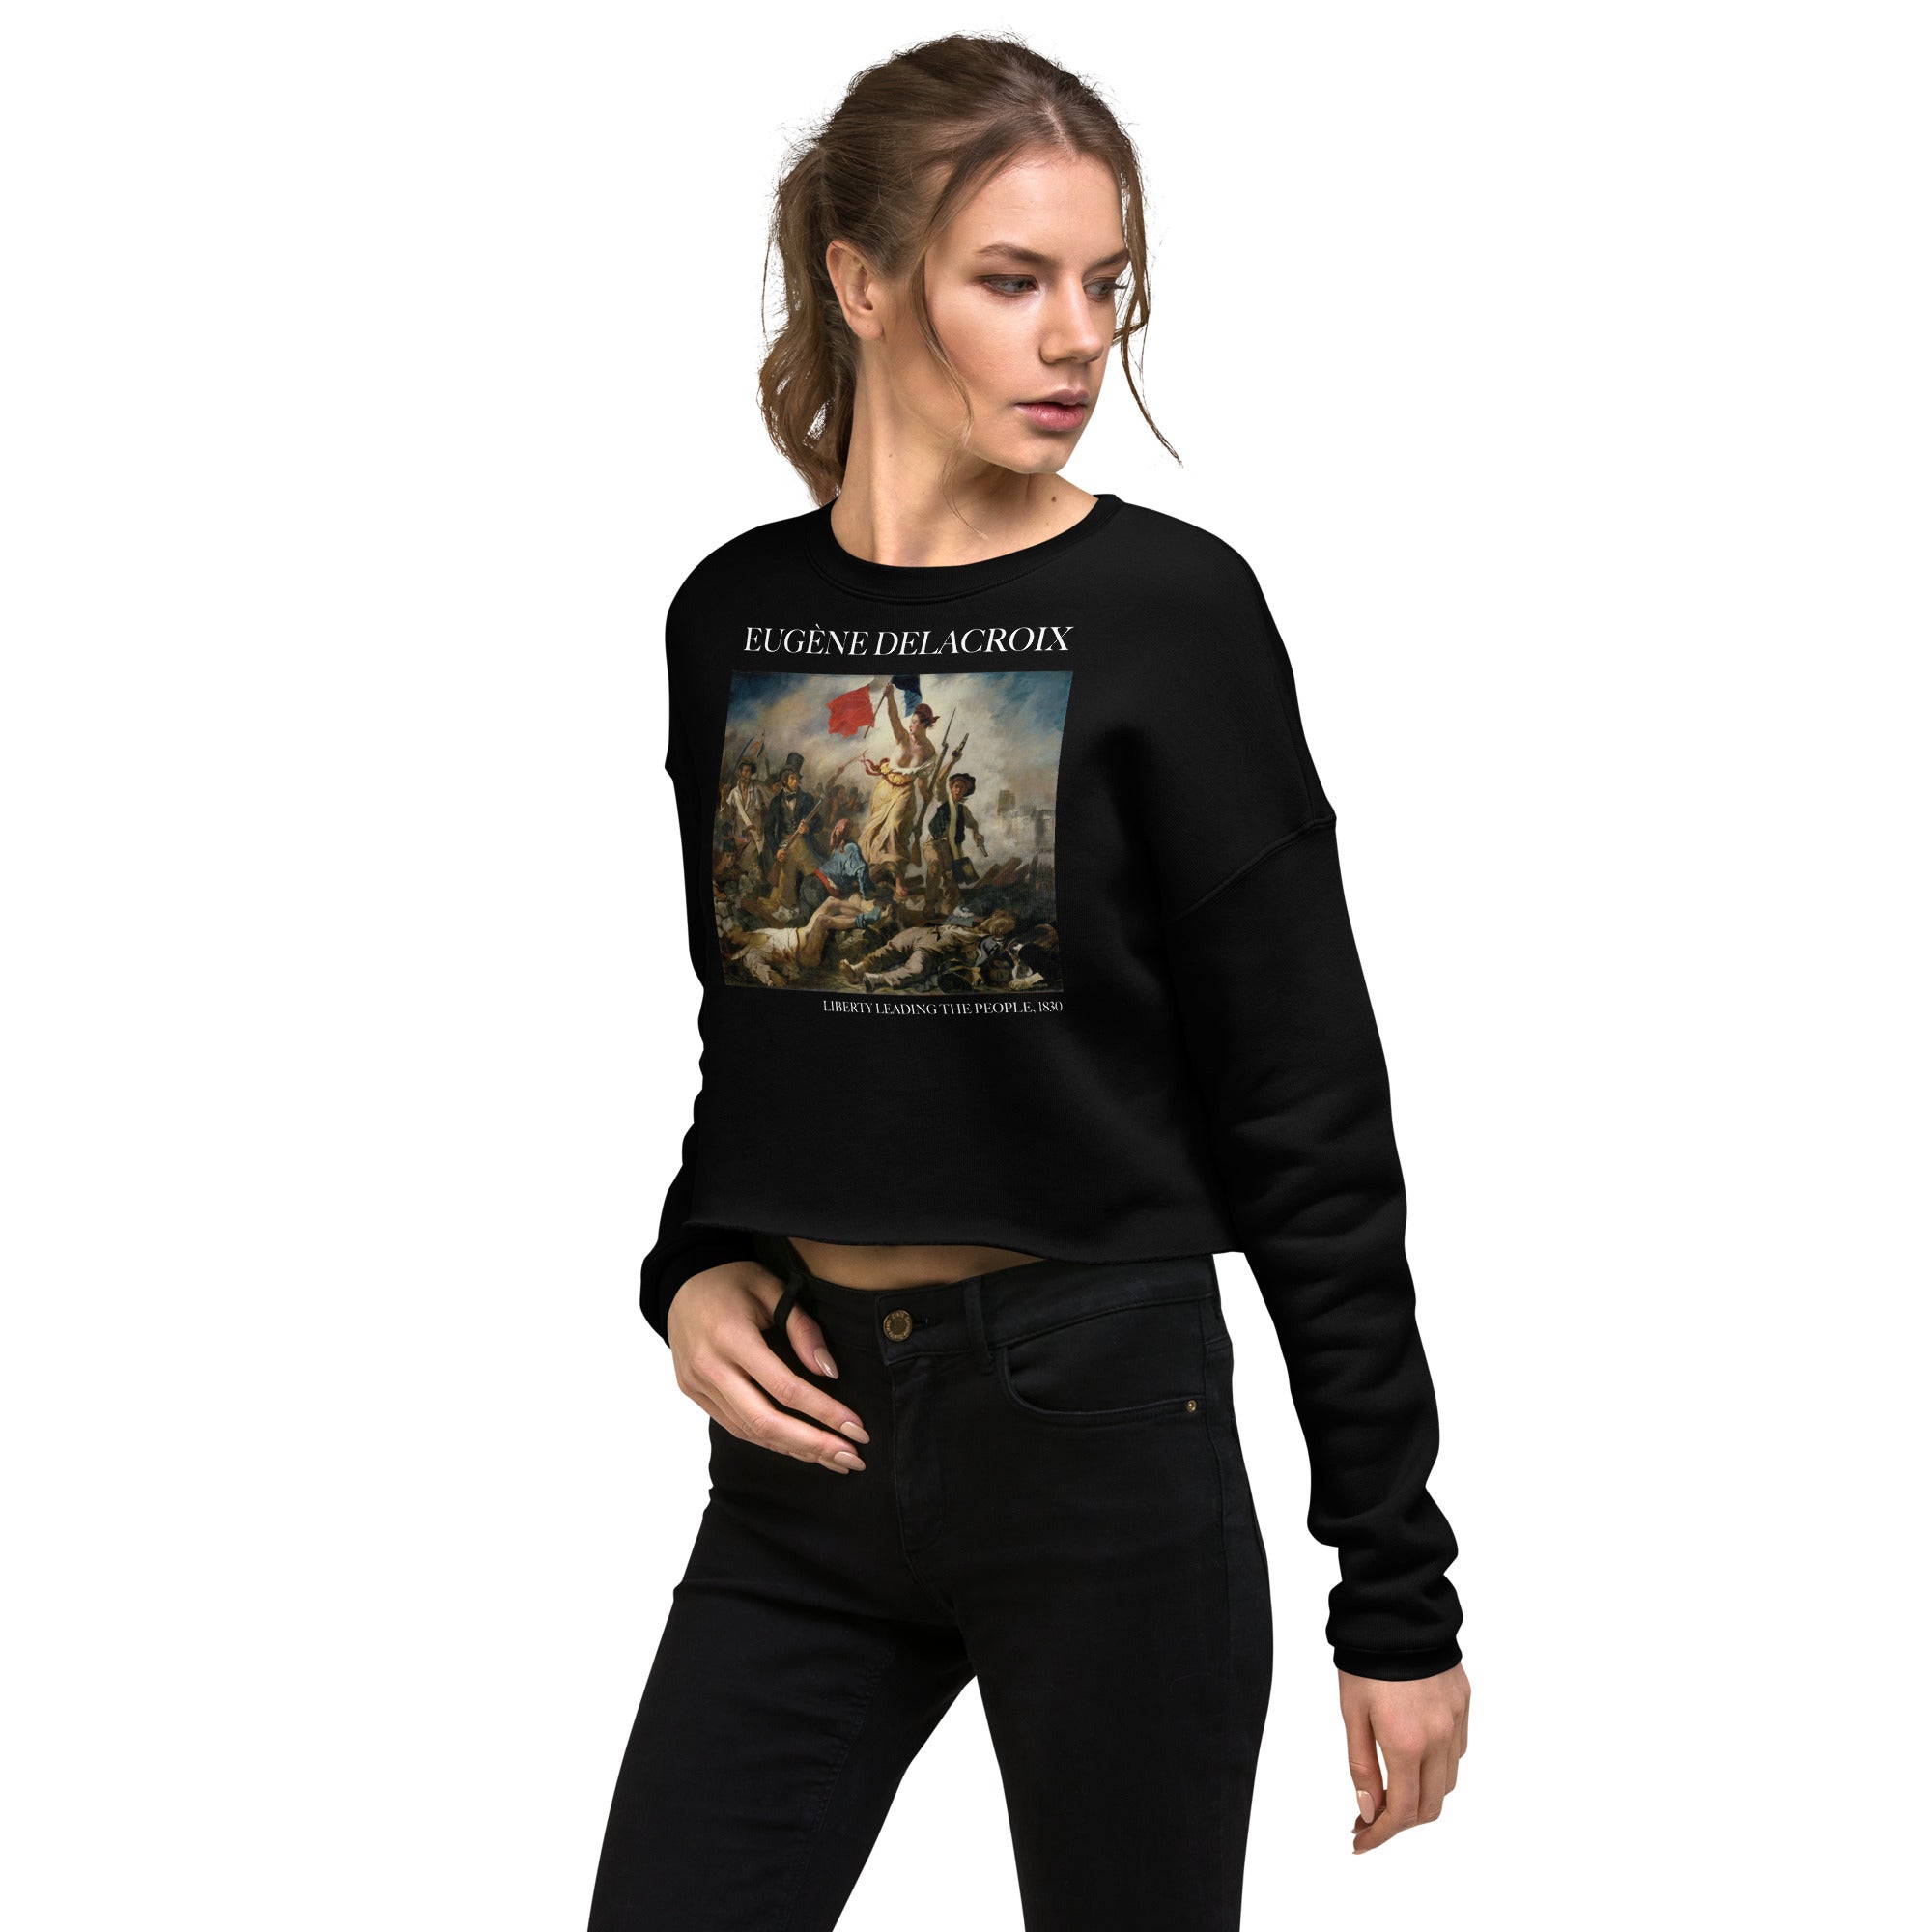 Eugène Delacroix 'Liberty Leading the People' Famous Painting Cropped Sweatshirt | Premium Art Cropped Sweatshirt